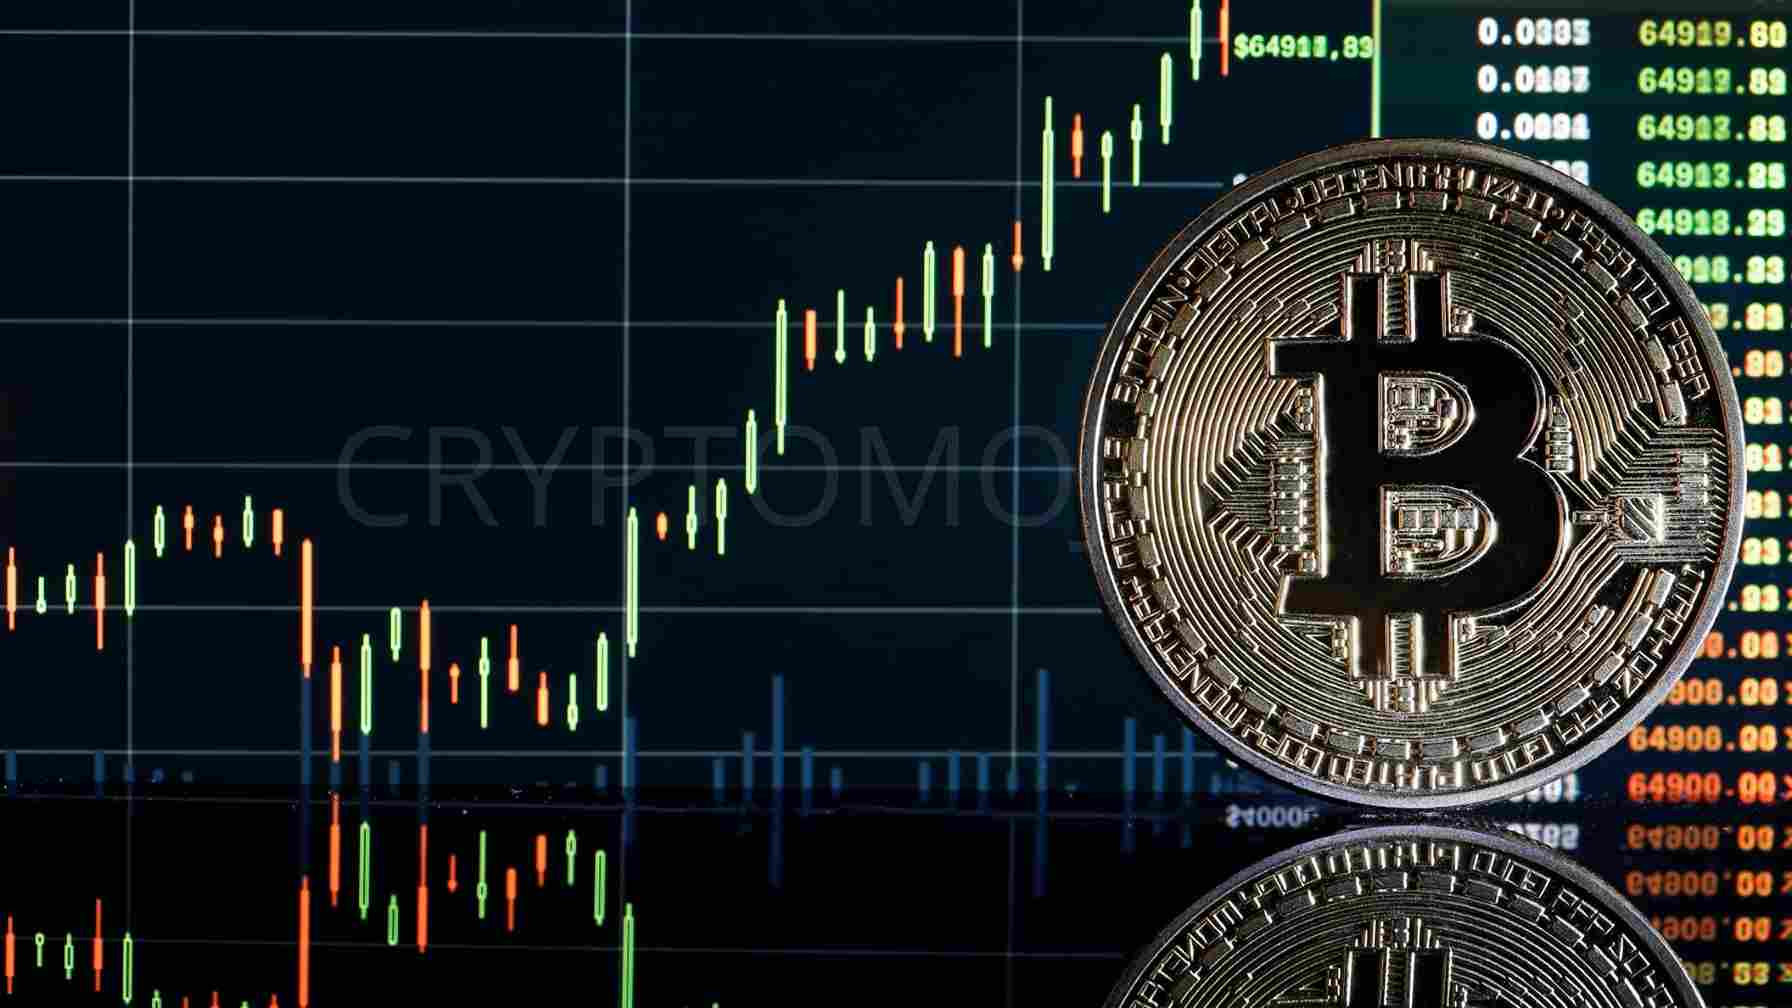 Bitcoin's Price Has Risen Above $20,000